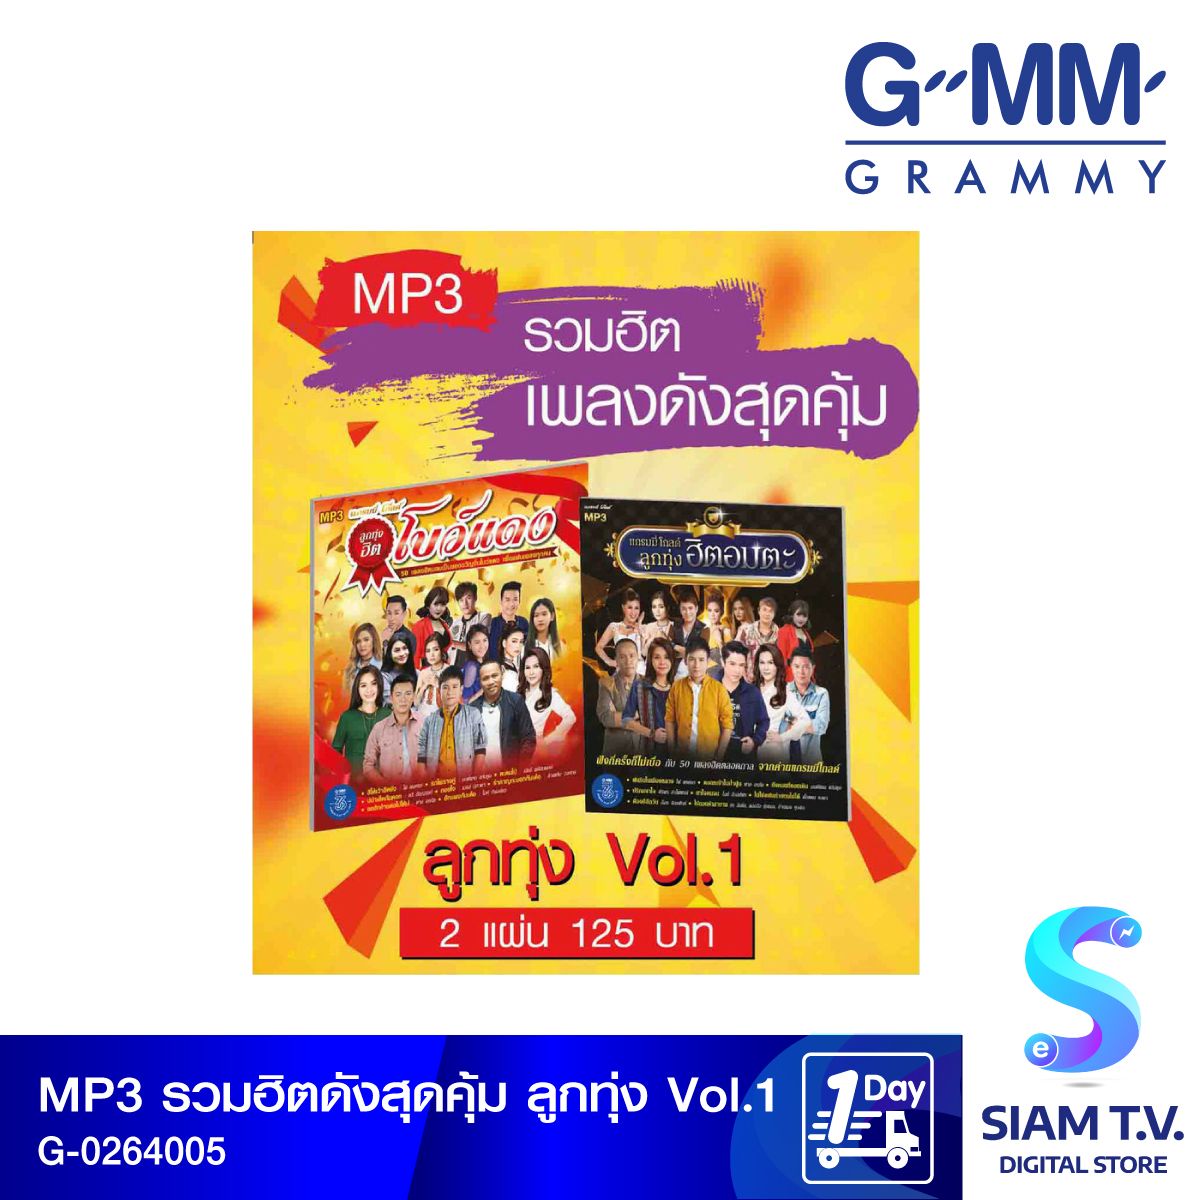 GMM GRAMMY MP3 รวมเพลงฮิตดัง สุดคุ้ม ลูกทุ่งVol.1